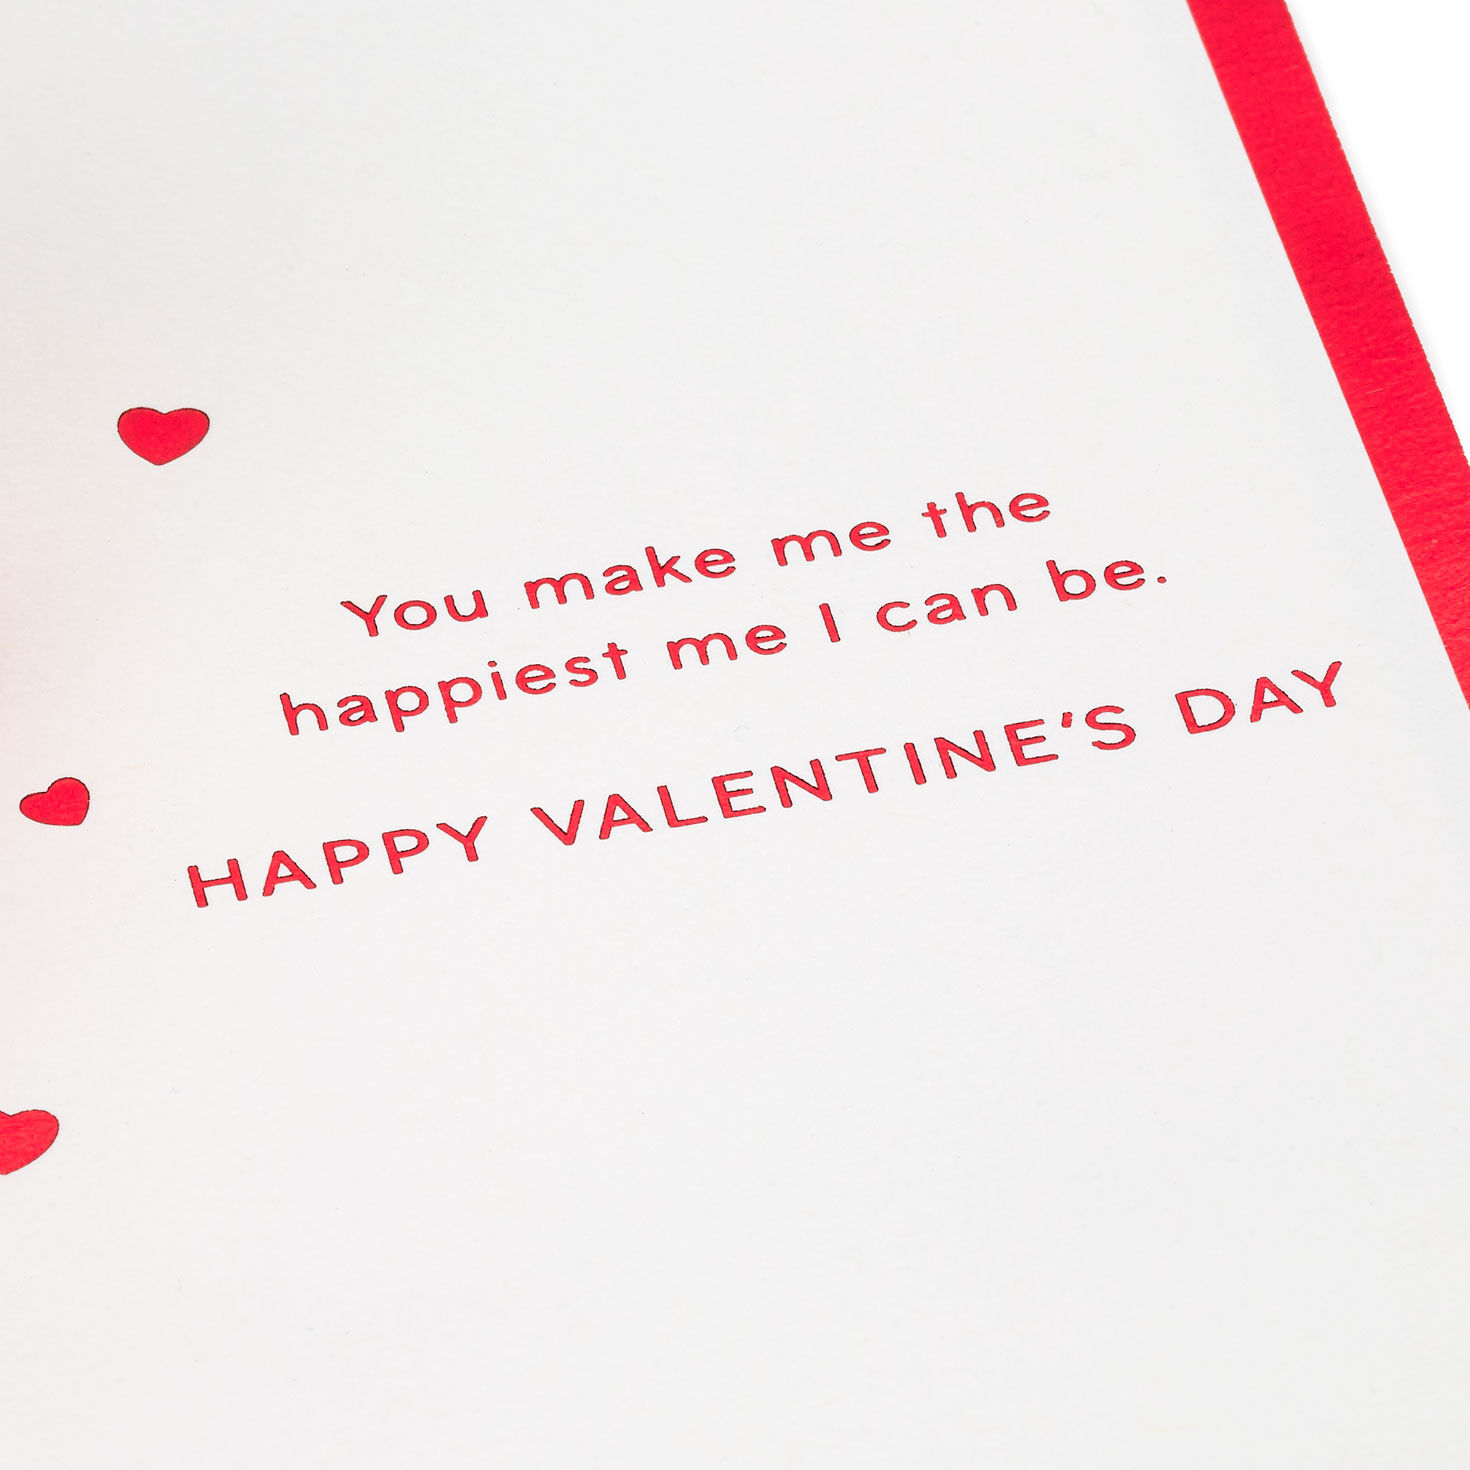 Disney Mickey and Minnie My Valentine 3D Pop-Up Valentine's Day Card for only USD 14.99 | Hallmark